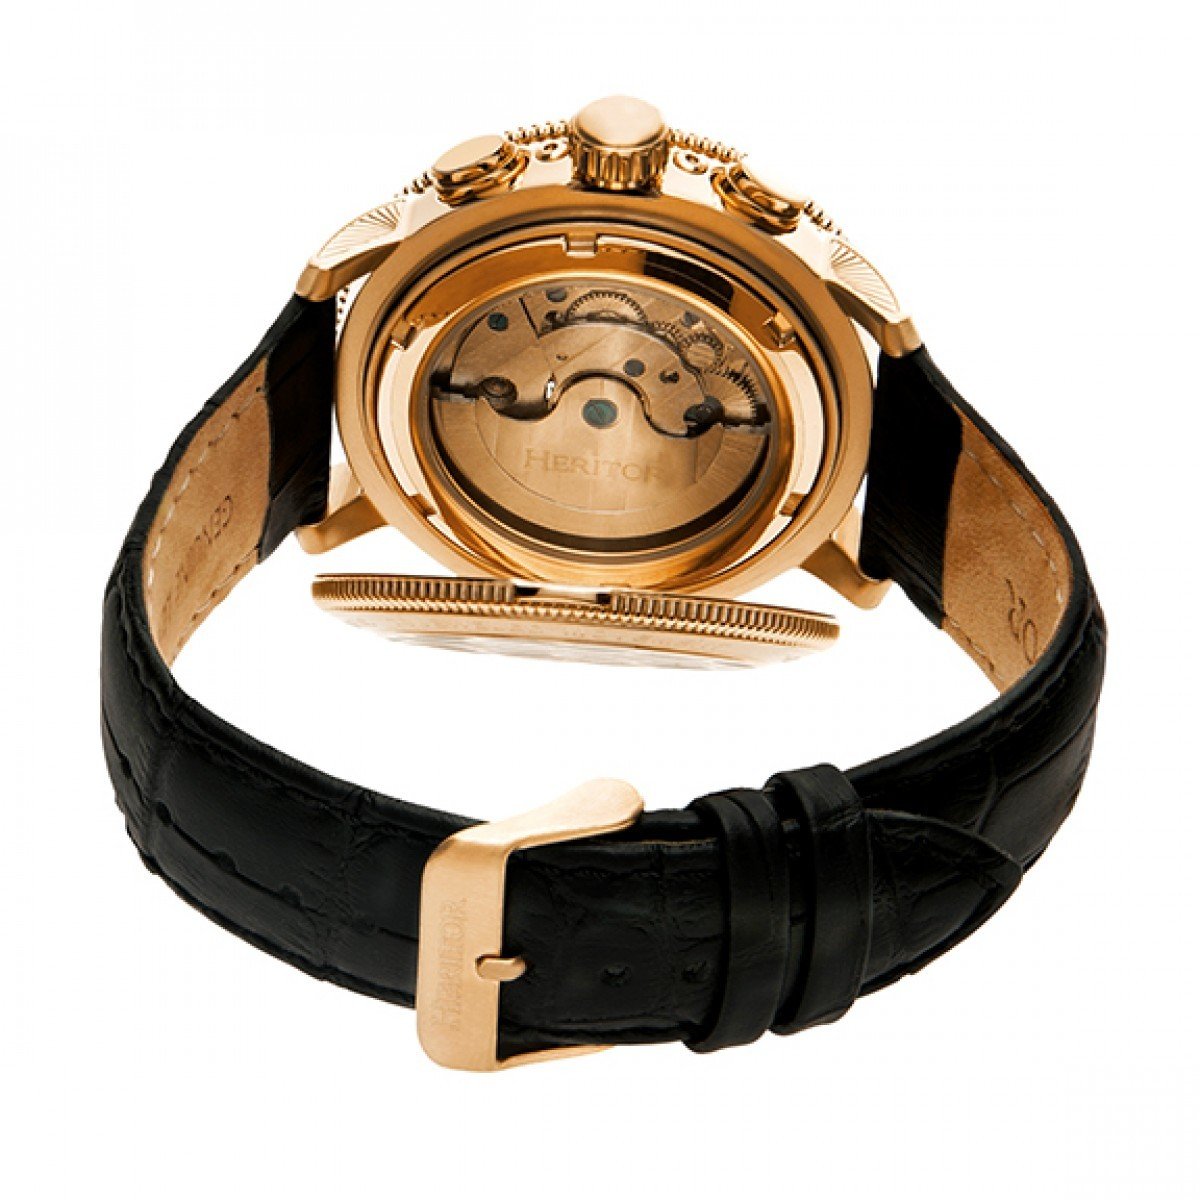 Heritor Automatic Aura Men's Semi-Skeleton Leather-Band Watch - Rose Gold/White - HERHR3506